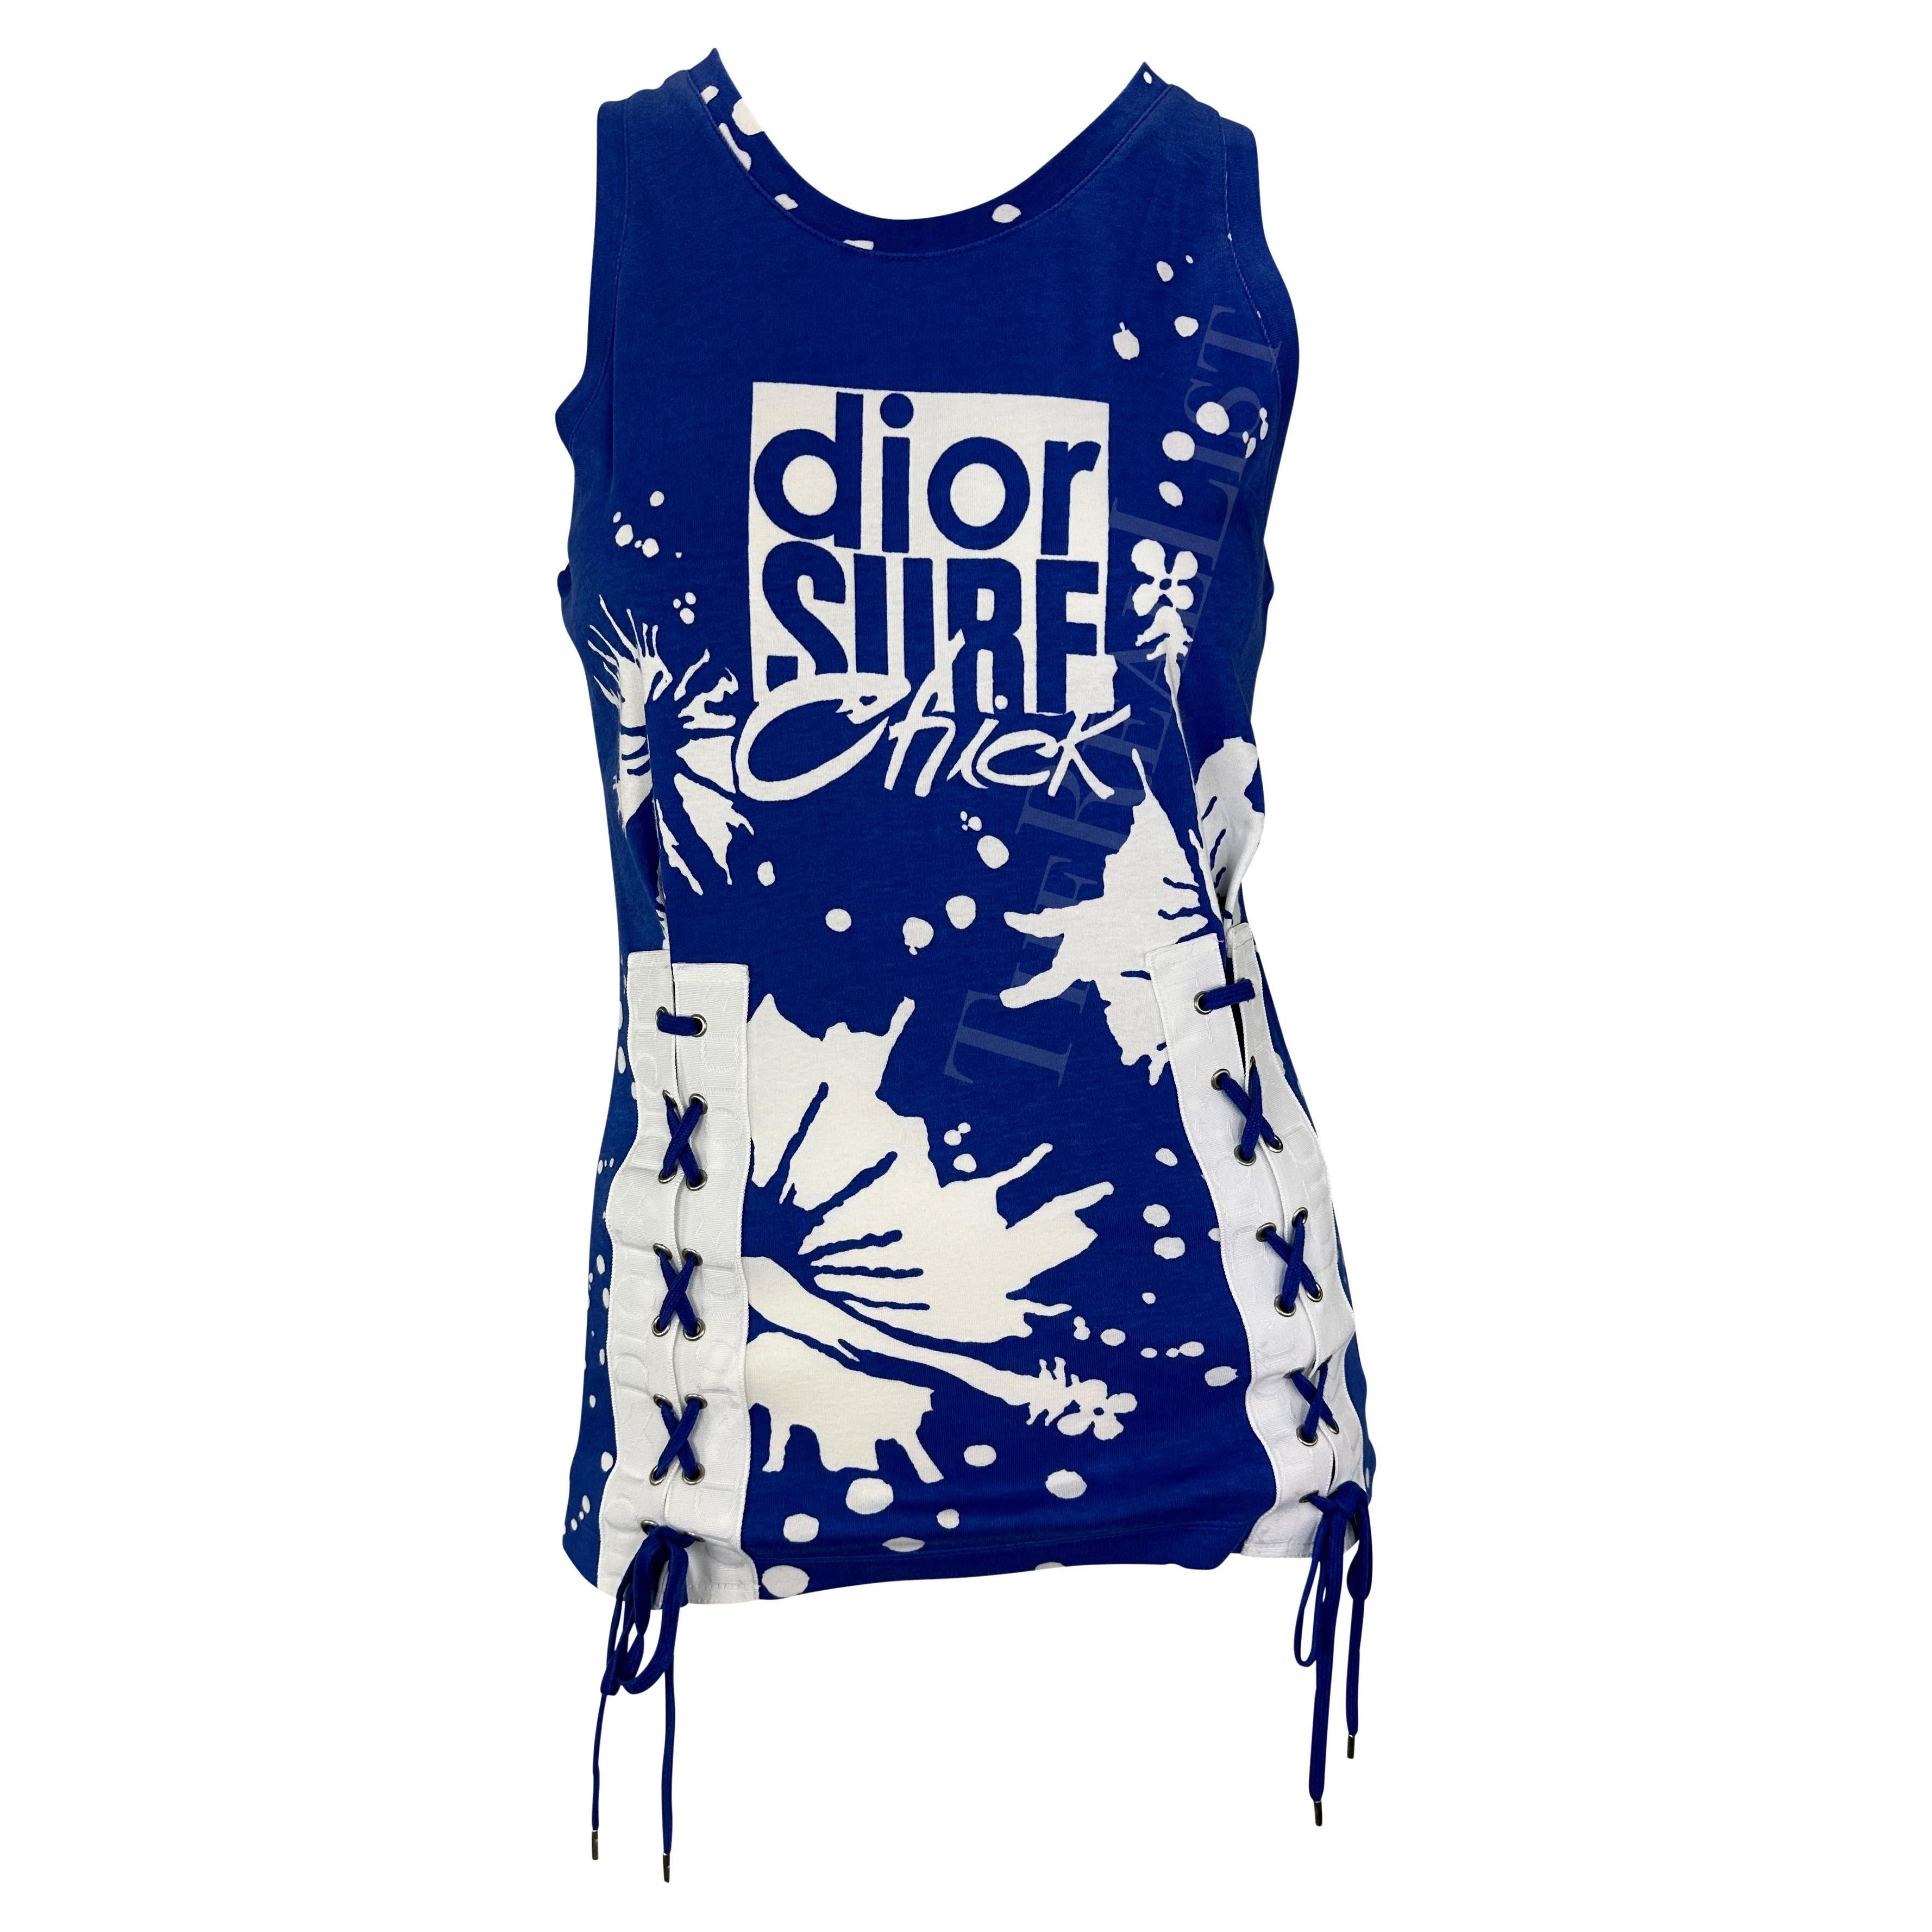 Dior Surf Chick - 2 For Sale on 1stDibs